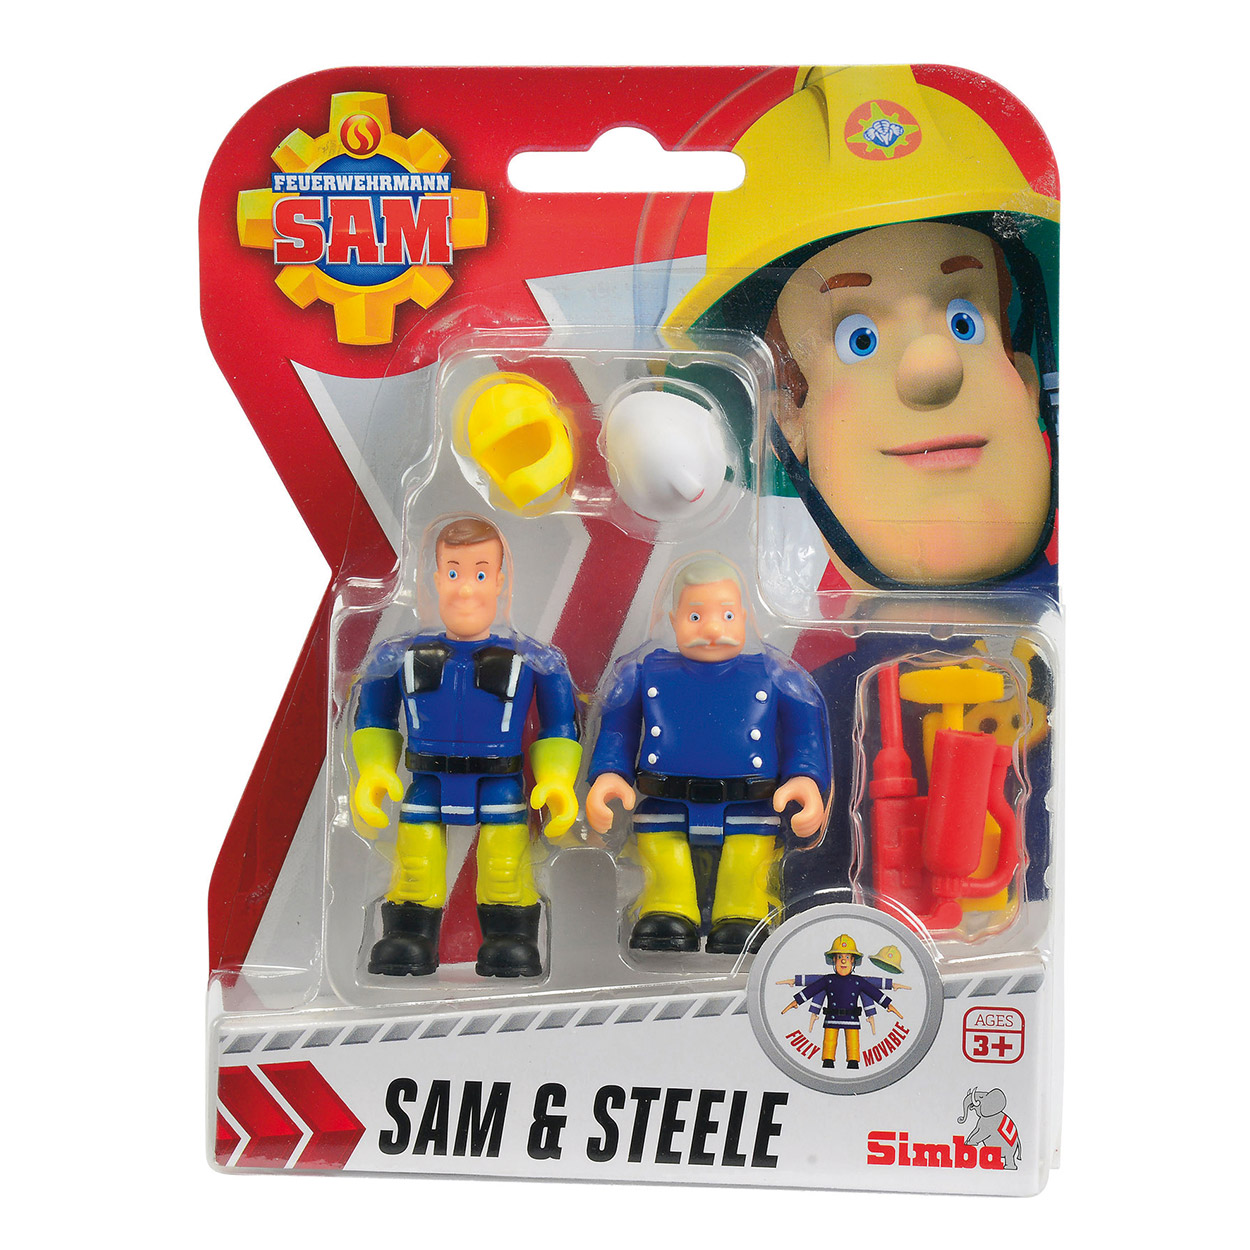 Bermad Oude man Percentage Brandweerman Sam Figuren - Sam & Steele | Thimble Toys